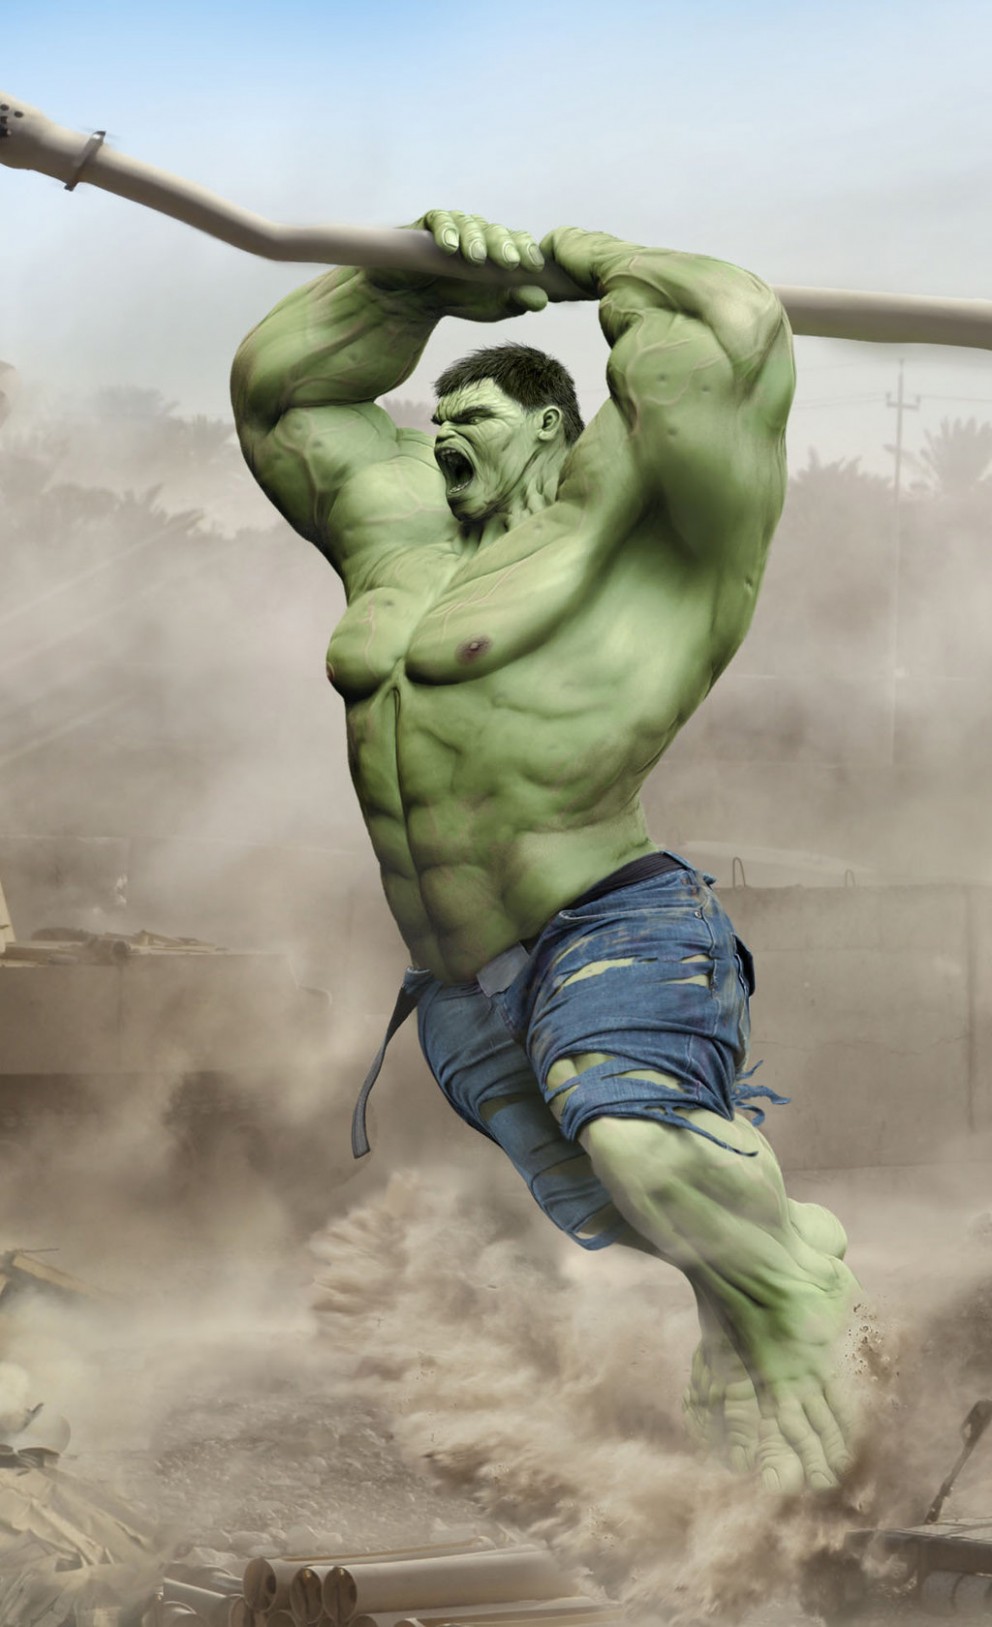 Portrait Art: Hulk - Closer Look - 3D, Concept art, Digital paintings